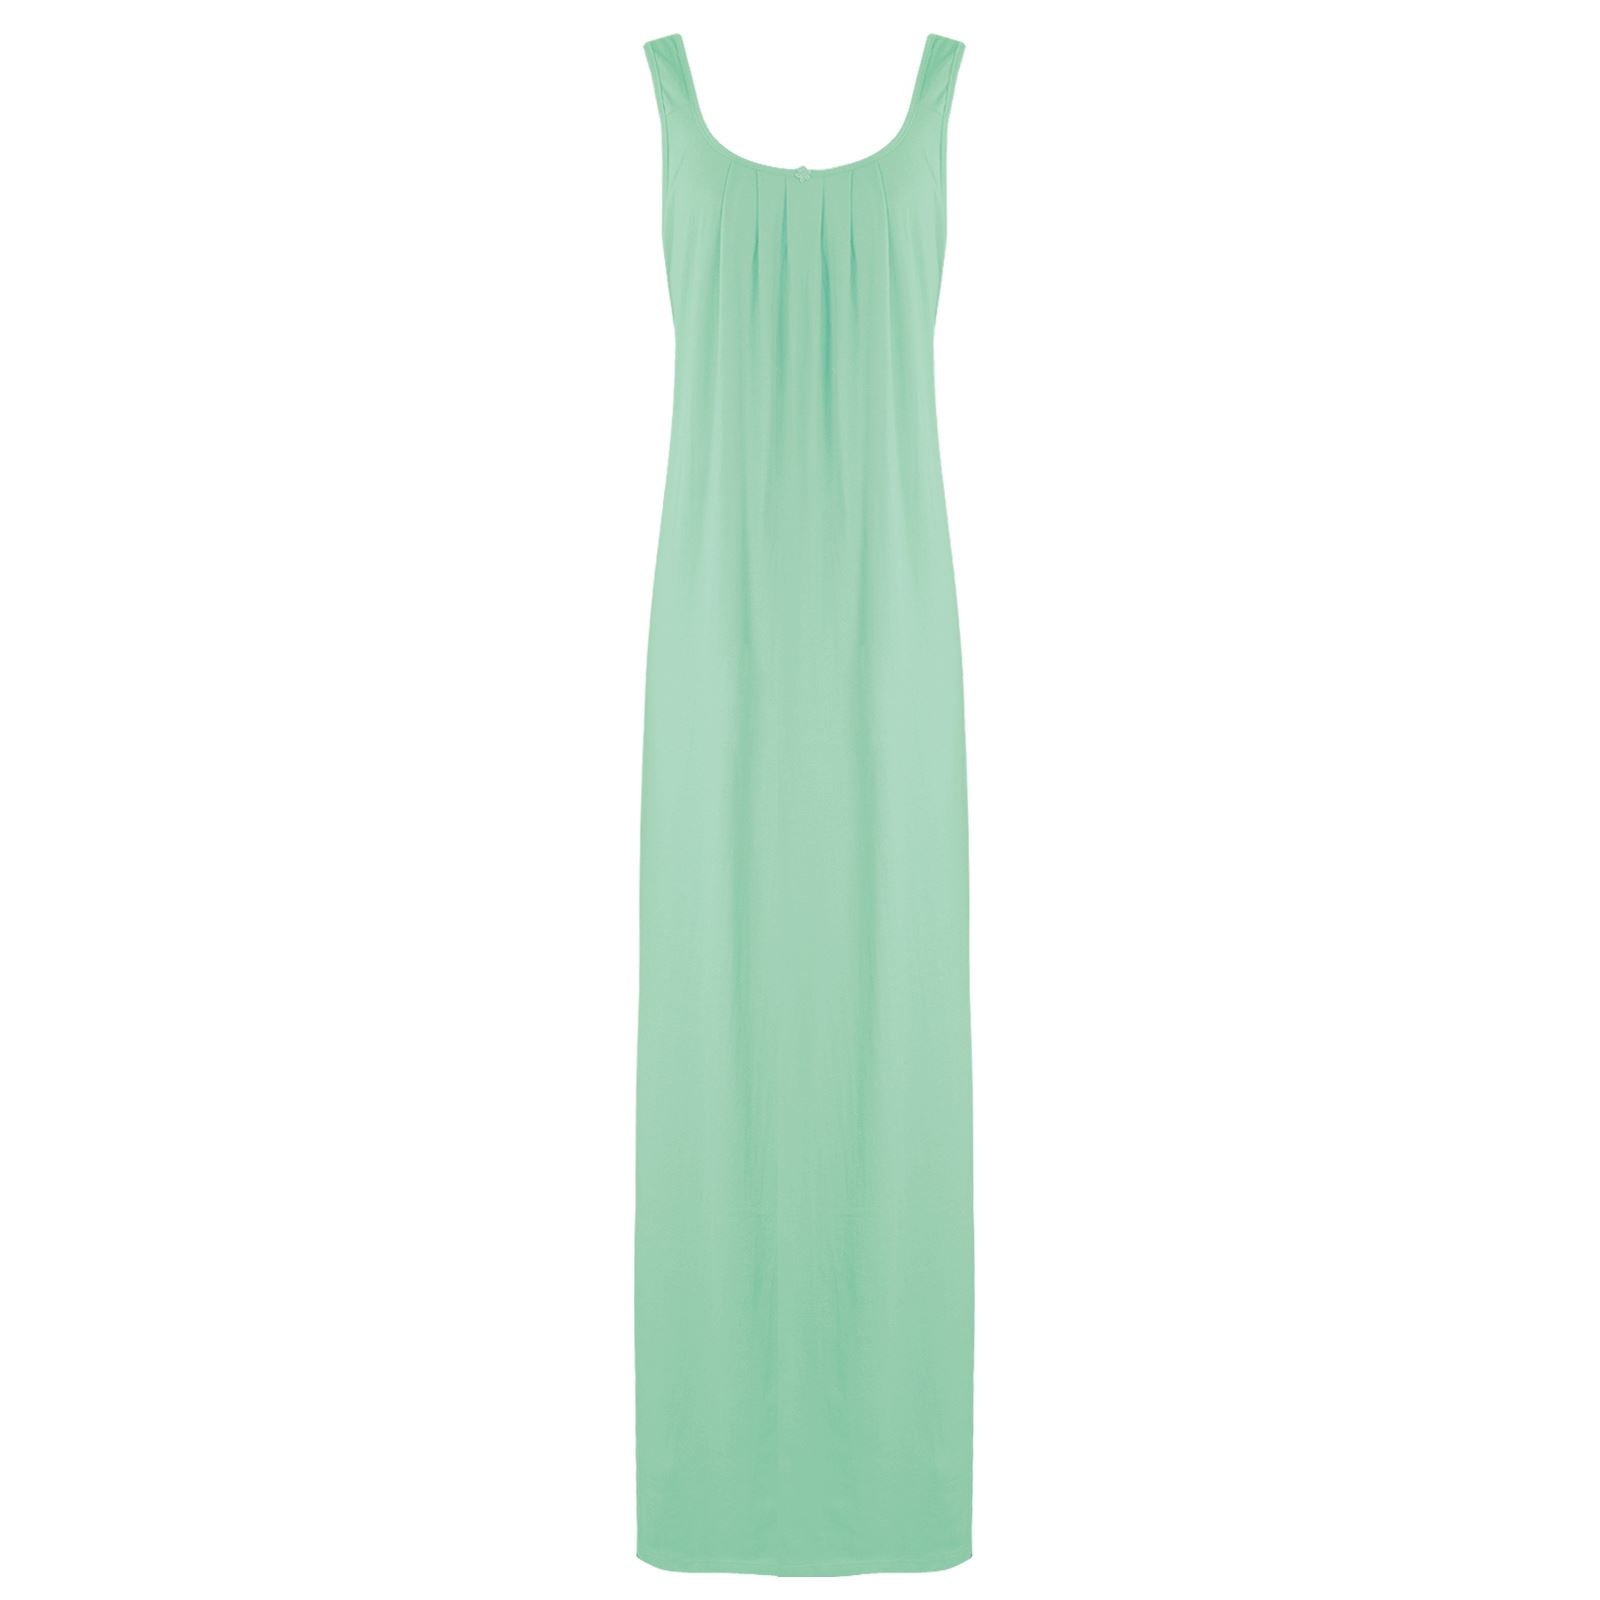 Sea Green- Plain / One Size Cotton Nighty Slip Heart Print / Plain Night Gown Free Size The Orange Tags